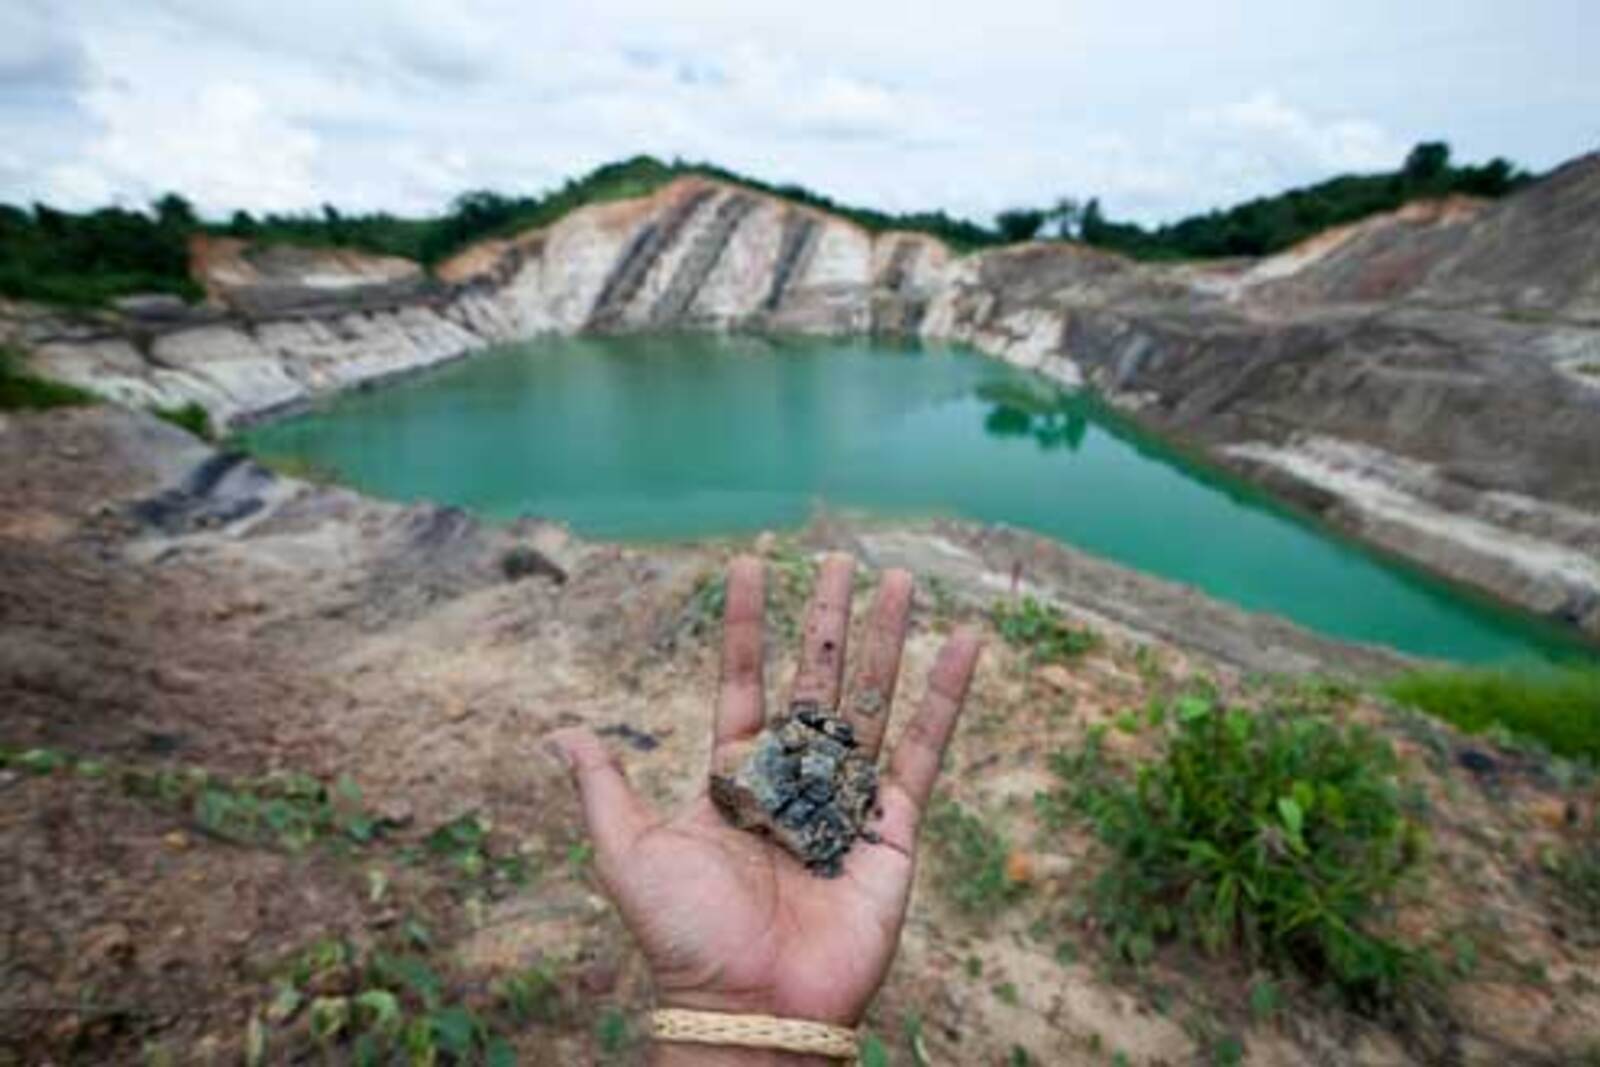 Coal mining in Kalimantan